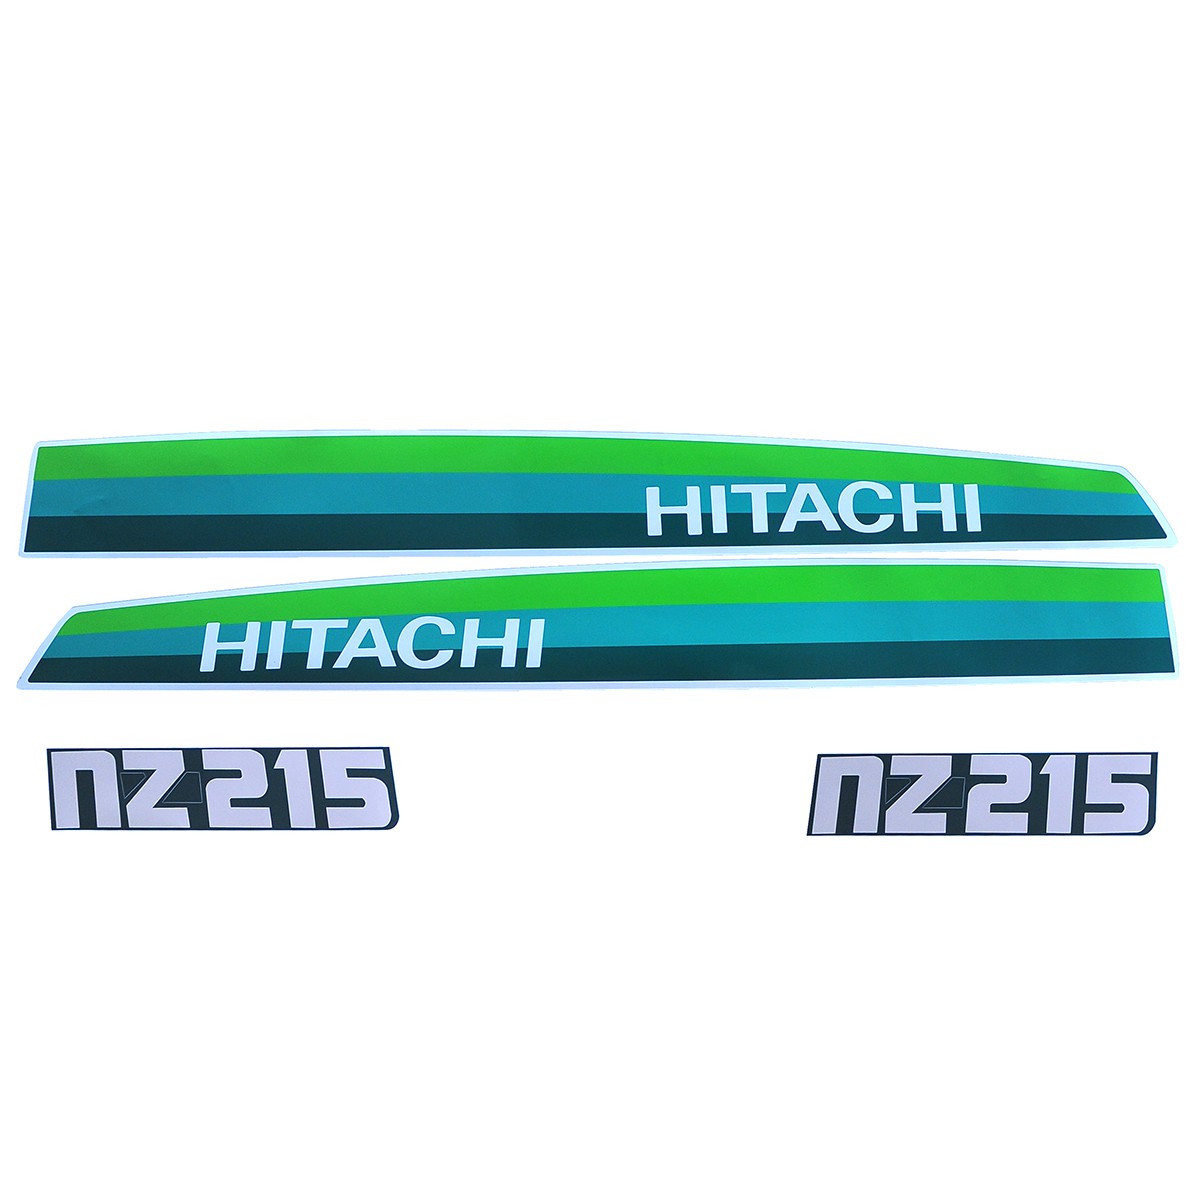 Hitachi NZ215 Aufkleber